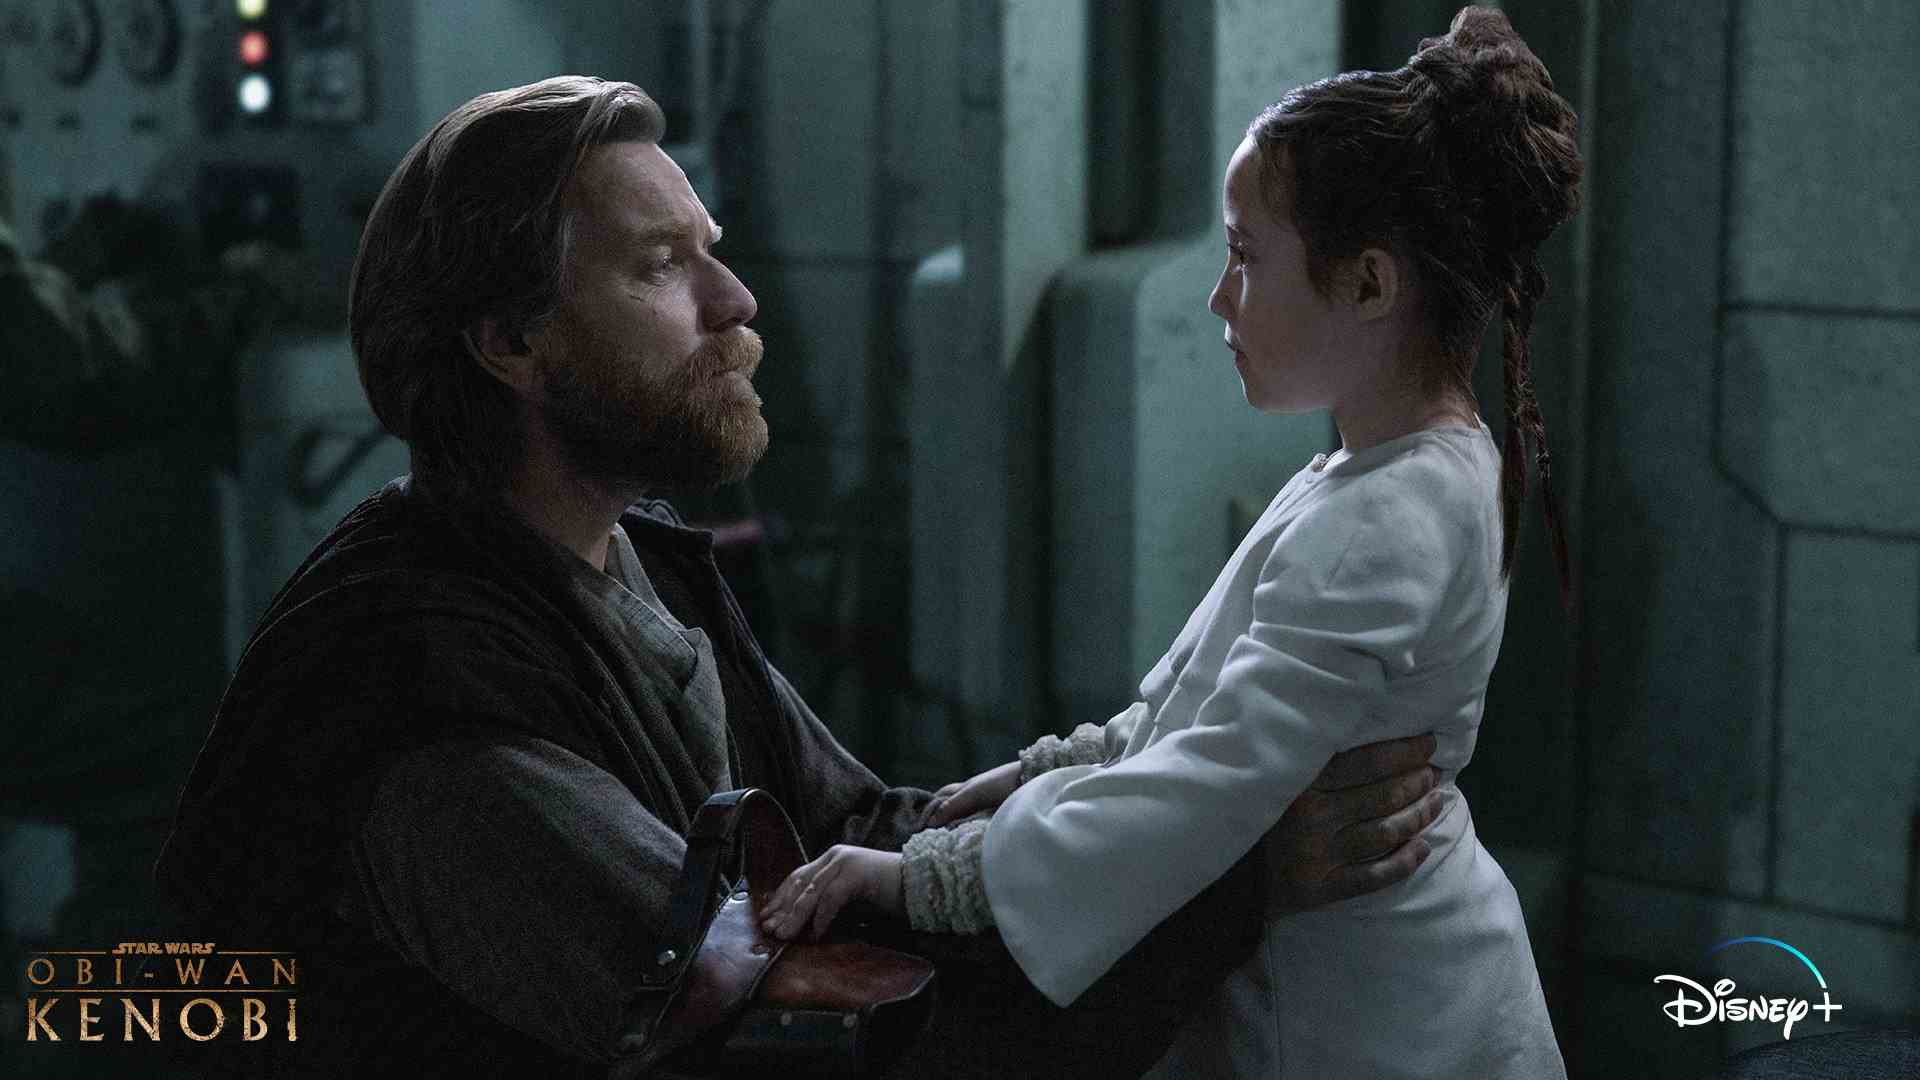 Die Obi-Wan-Kenobi-Serie rechtfertigt den jungen Leia Organa-Namenssohn Ben Solo Kylo Ren